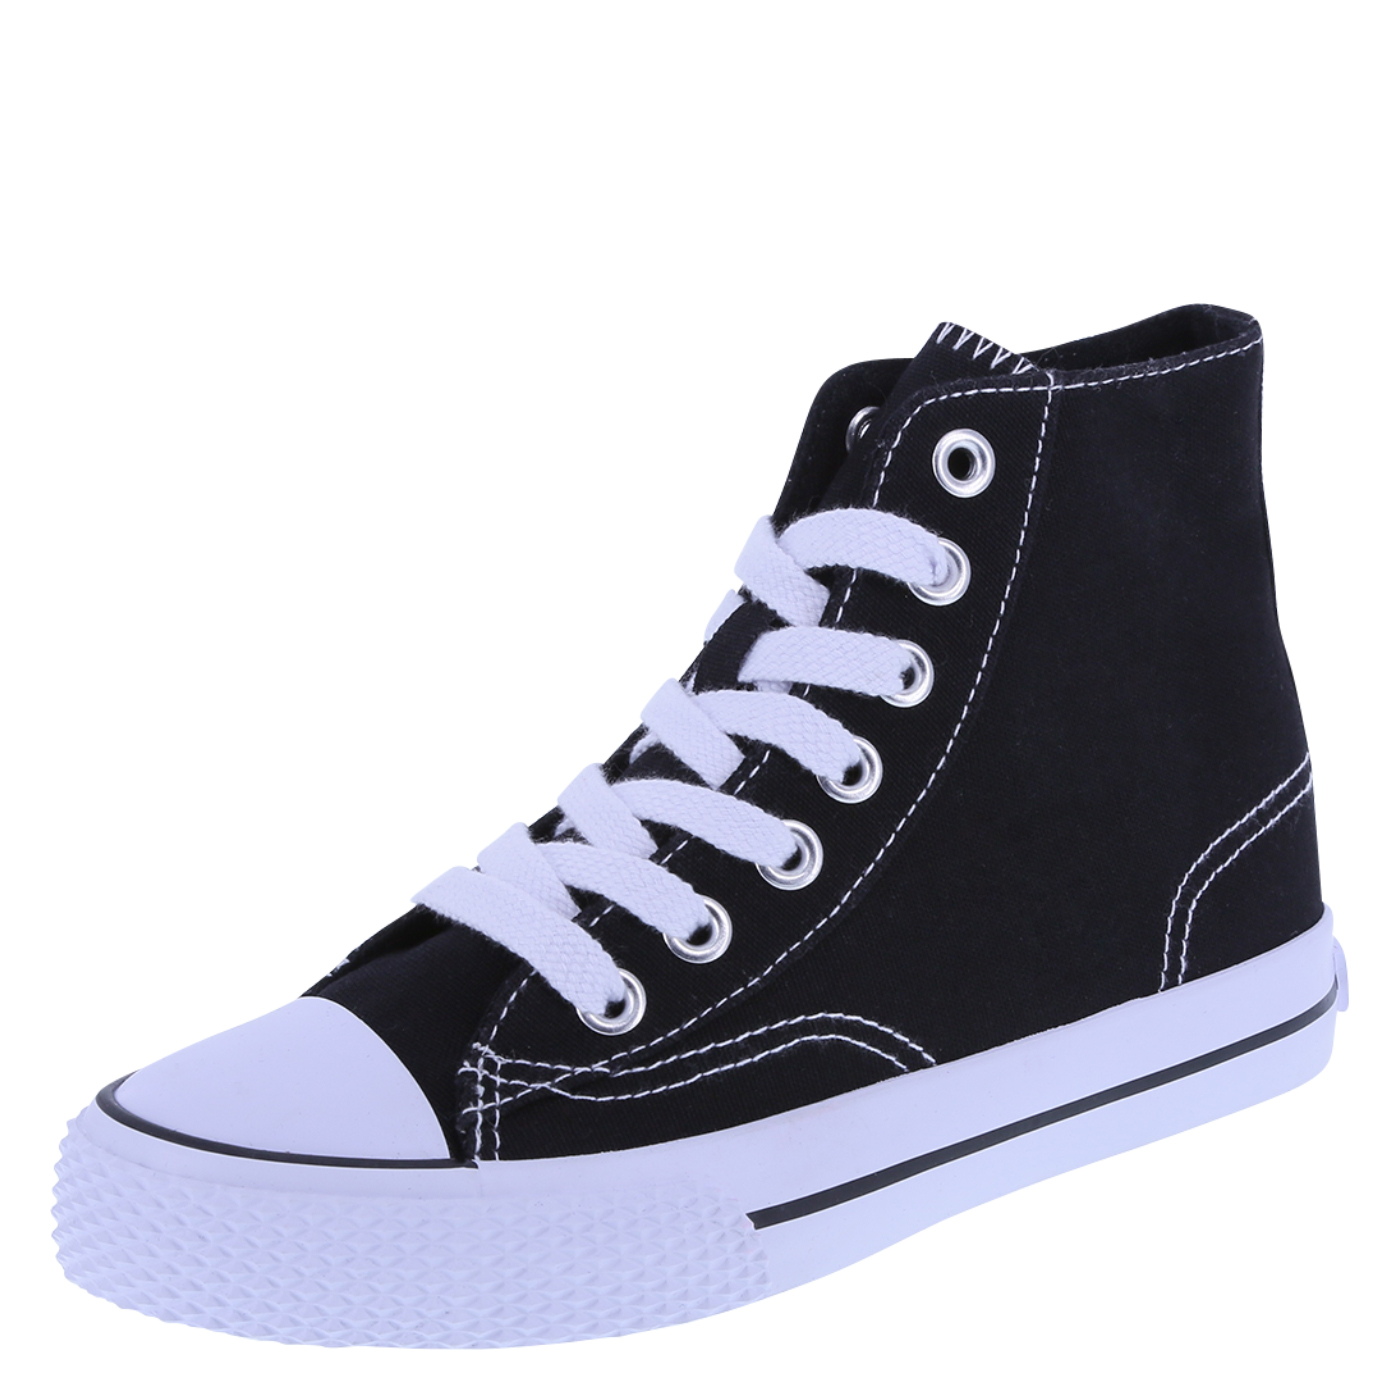 sneakers for girls kidsu0027 legacee sneaker high-top, black/white QQDPKYA